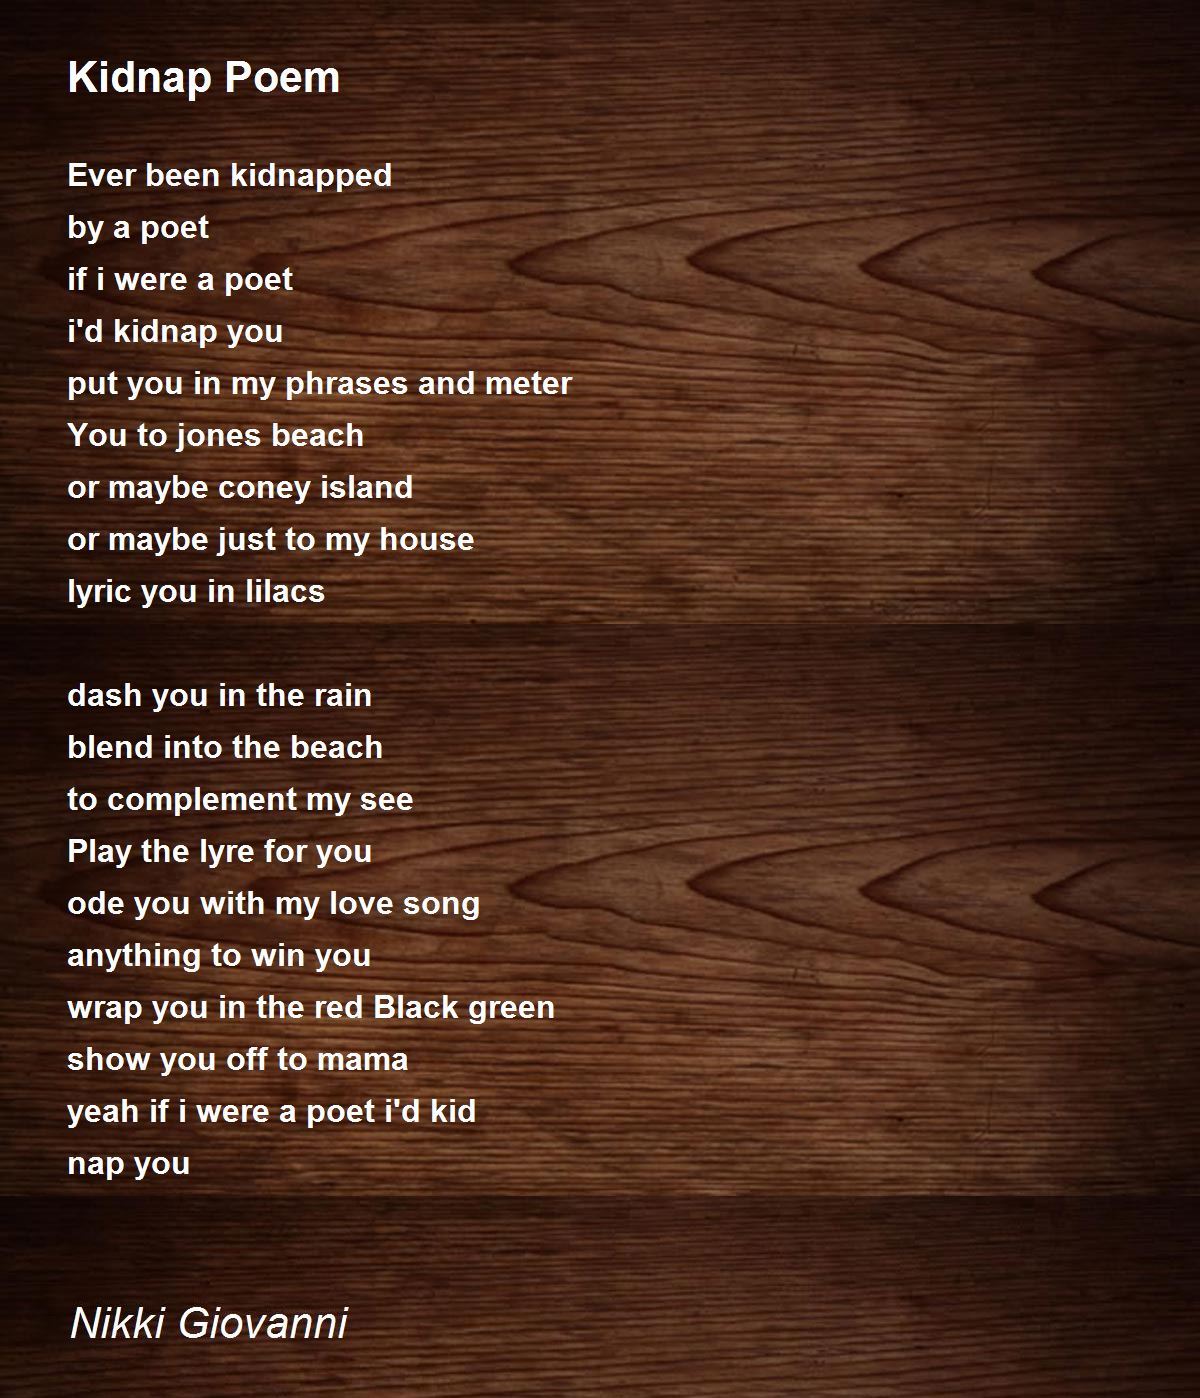 Kidnap Poem Poem by Nikki Giovanni - Poem Hunter